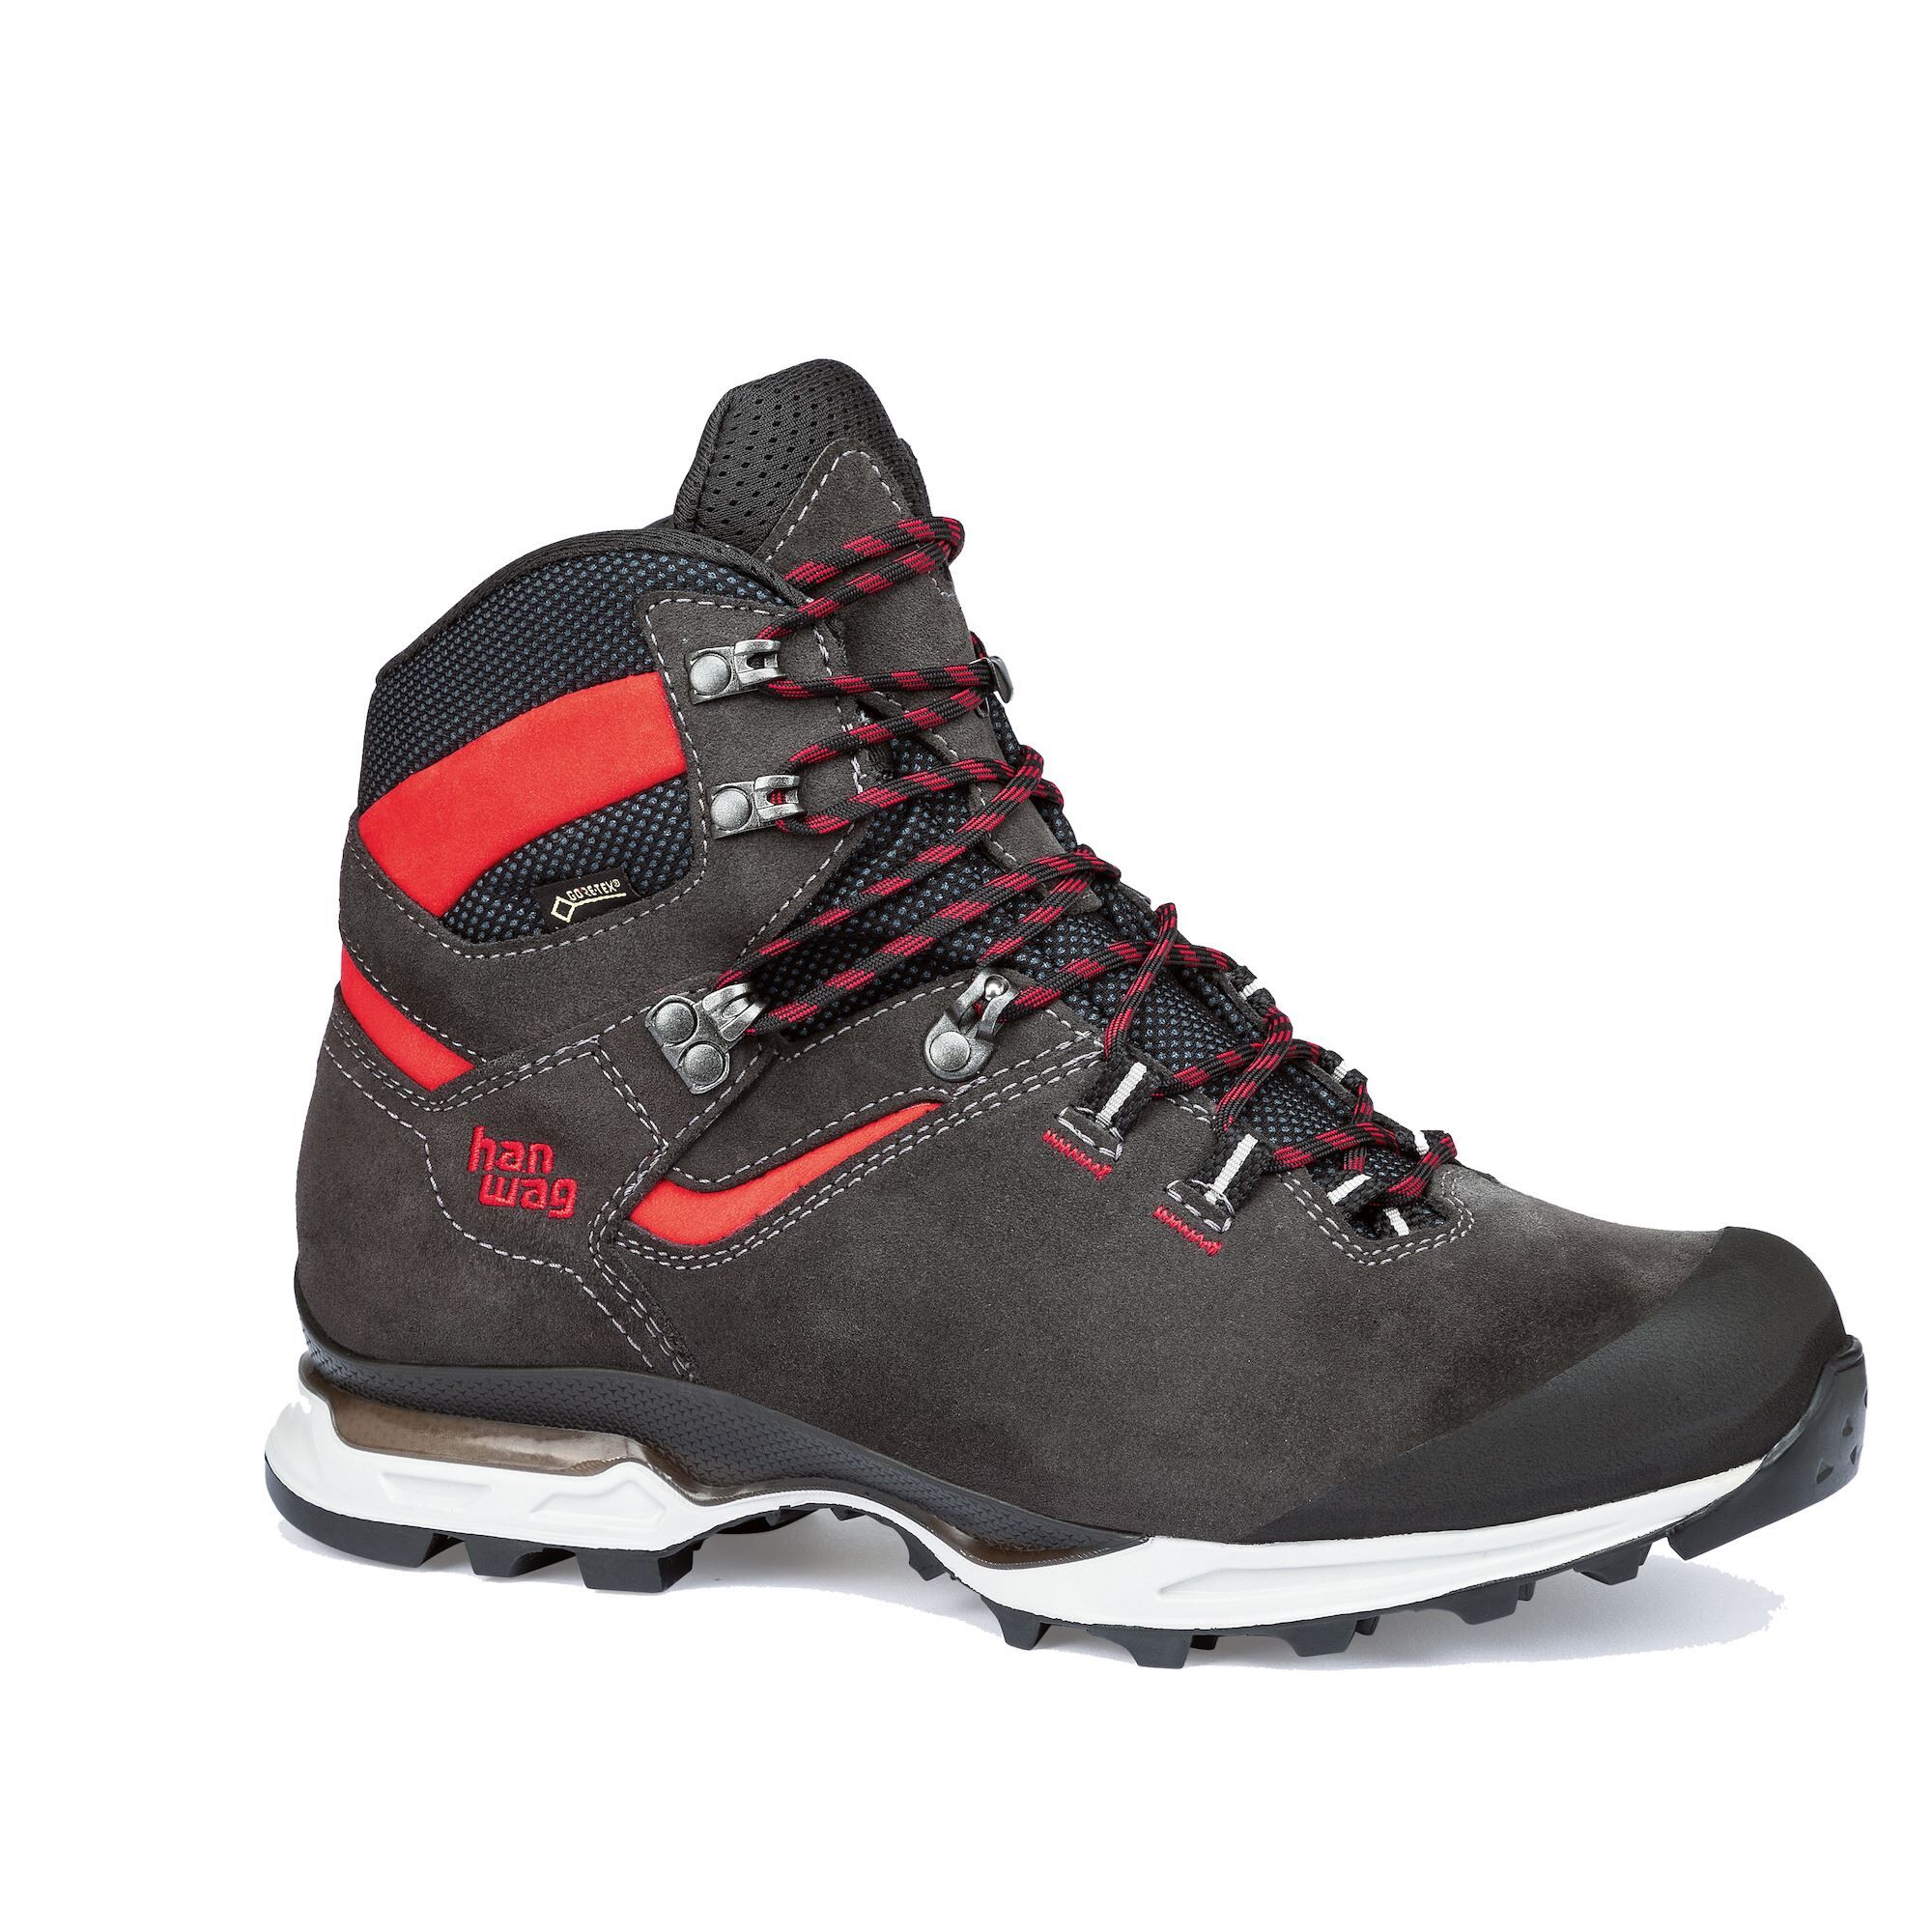 Hanwag Tatra Light GTX - Hiking Boots - Men's